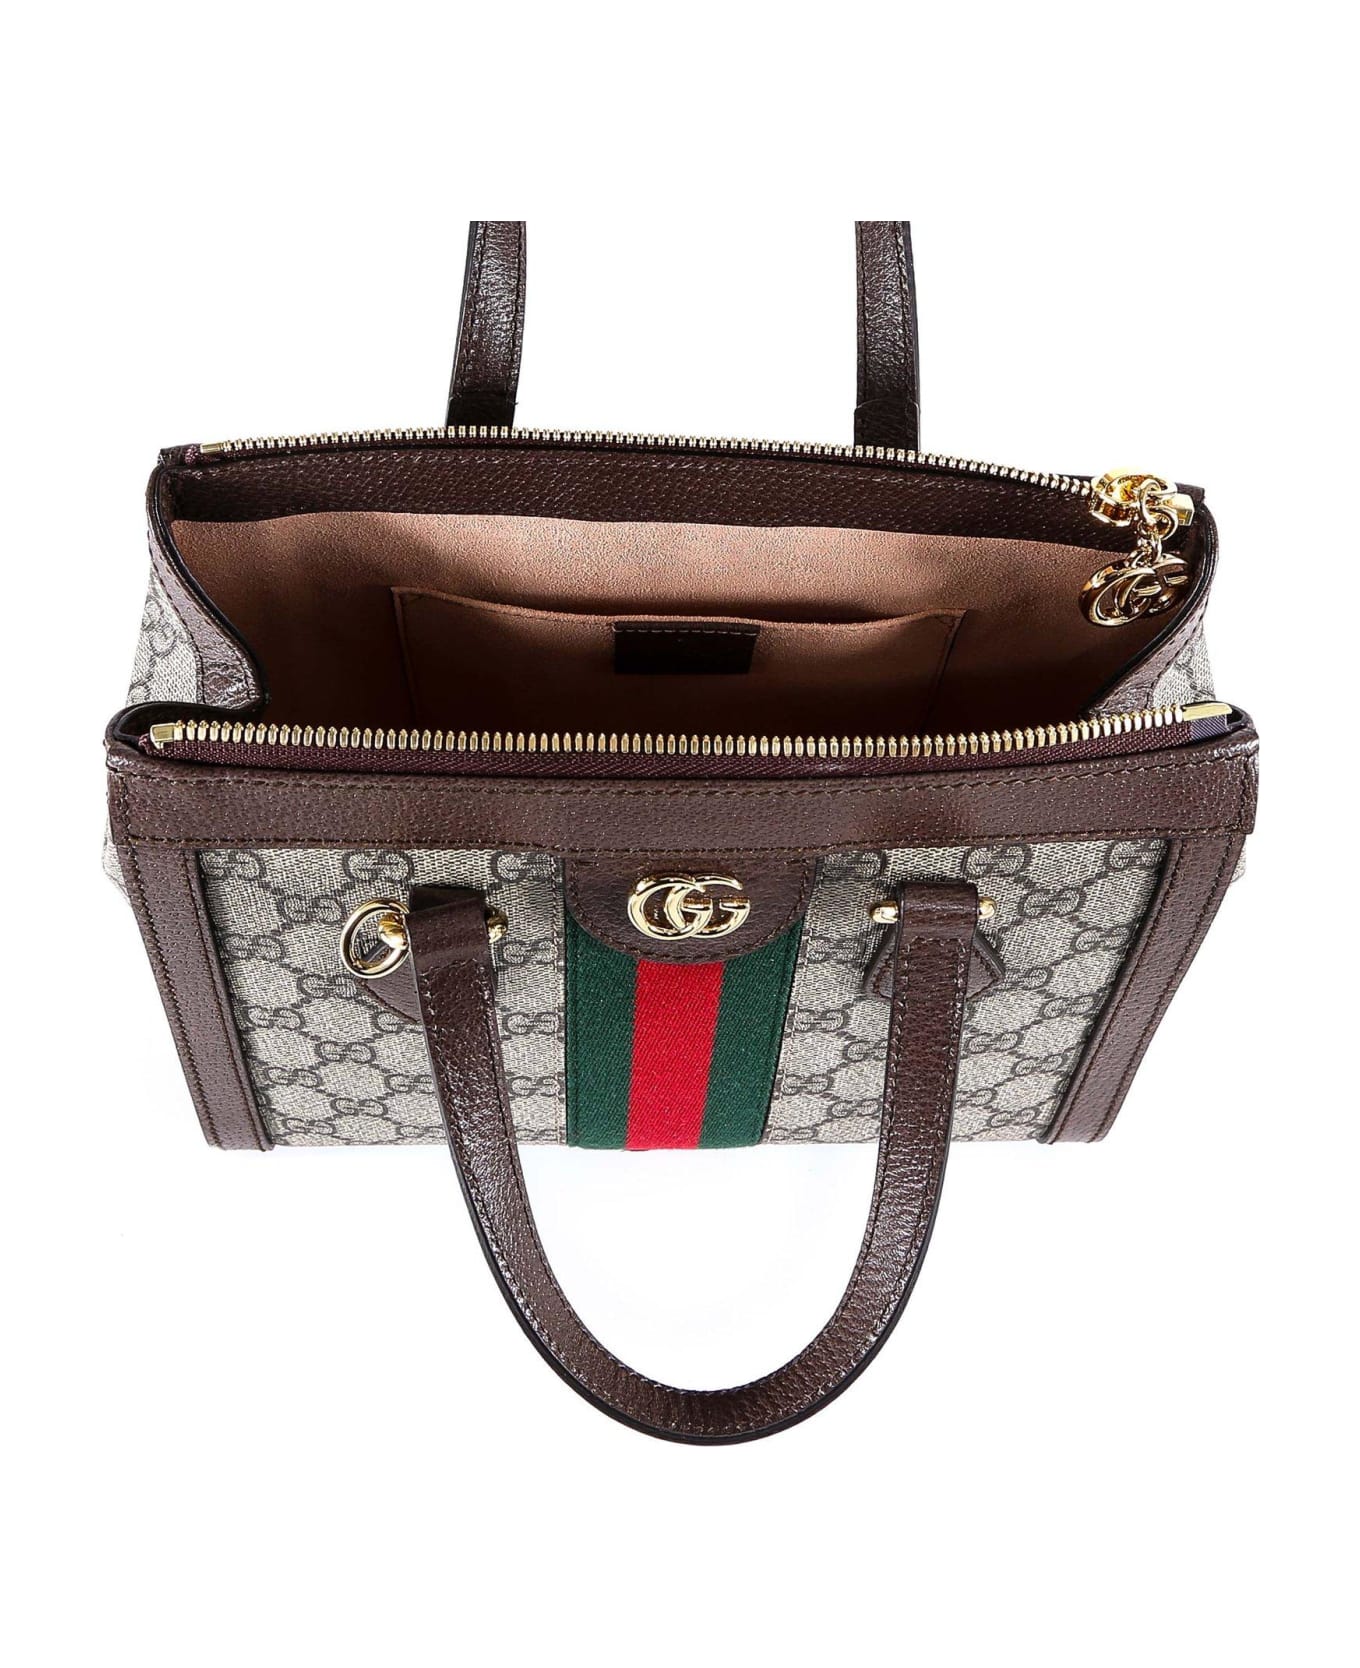 Gucci Ophidia Small Gg Tote Bag - Acero